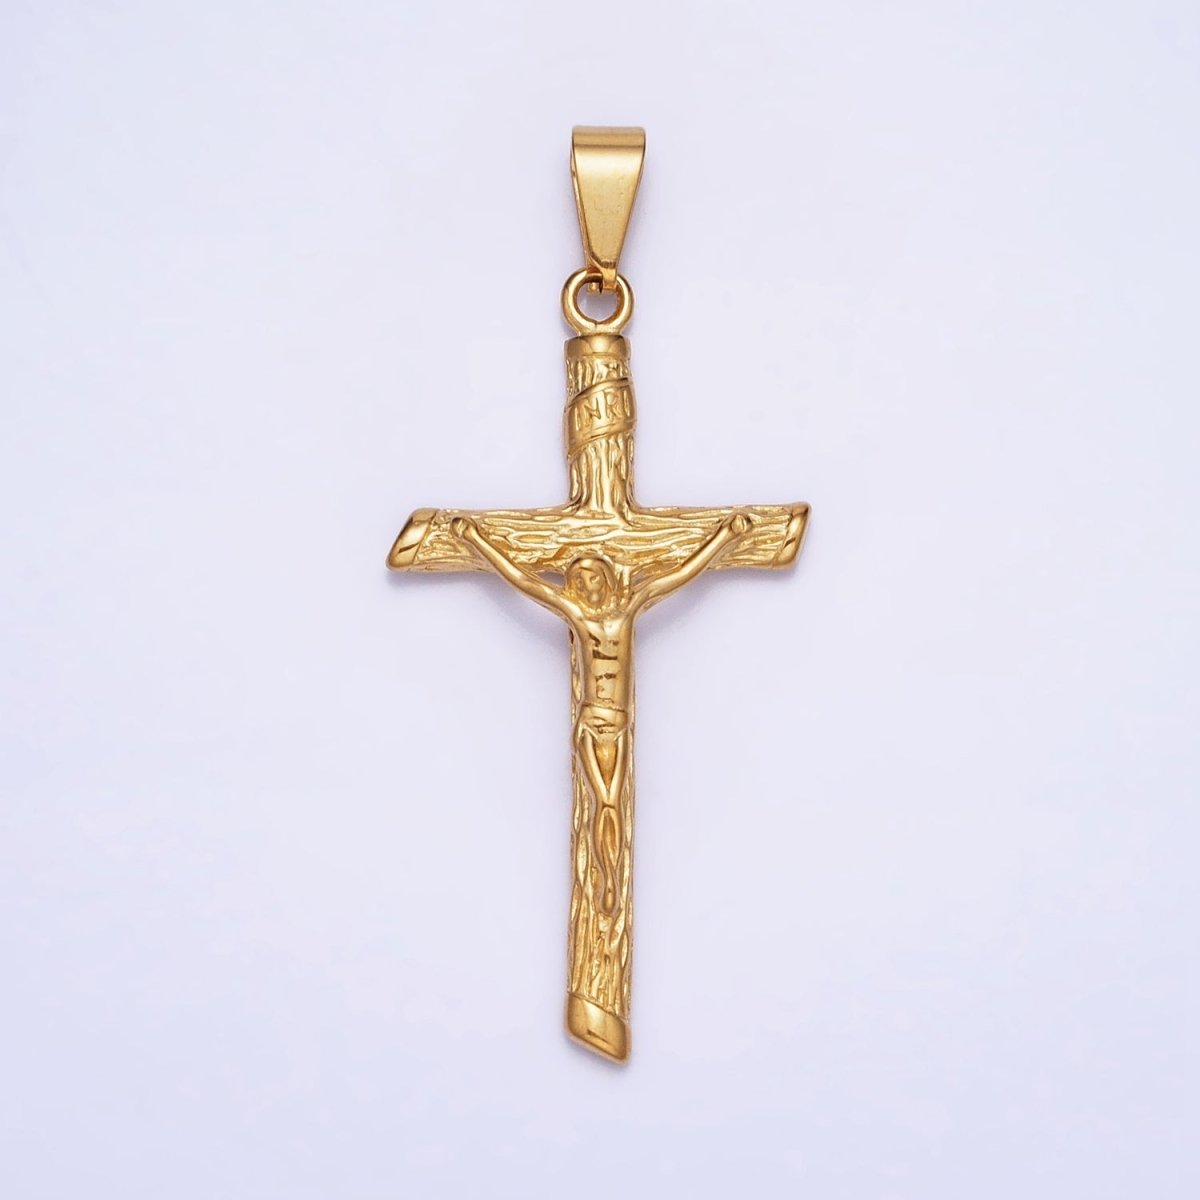 Stainless Steel INRI Crucifix Jesus Wood-Textured Cross 50mm Pendant in Gold & Silver J-812 J-813 - DLUXCA